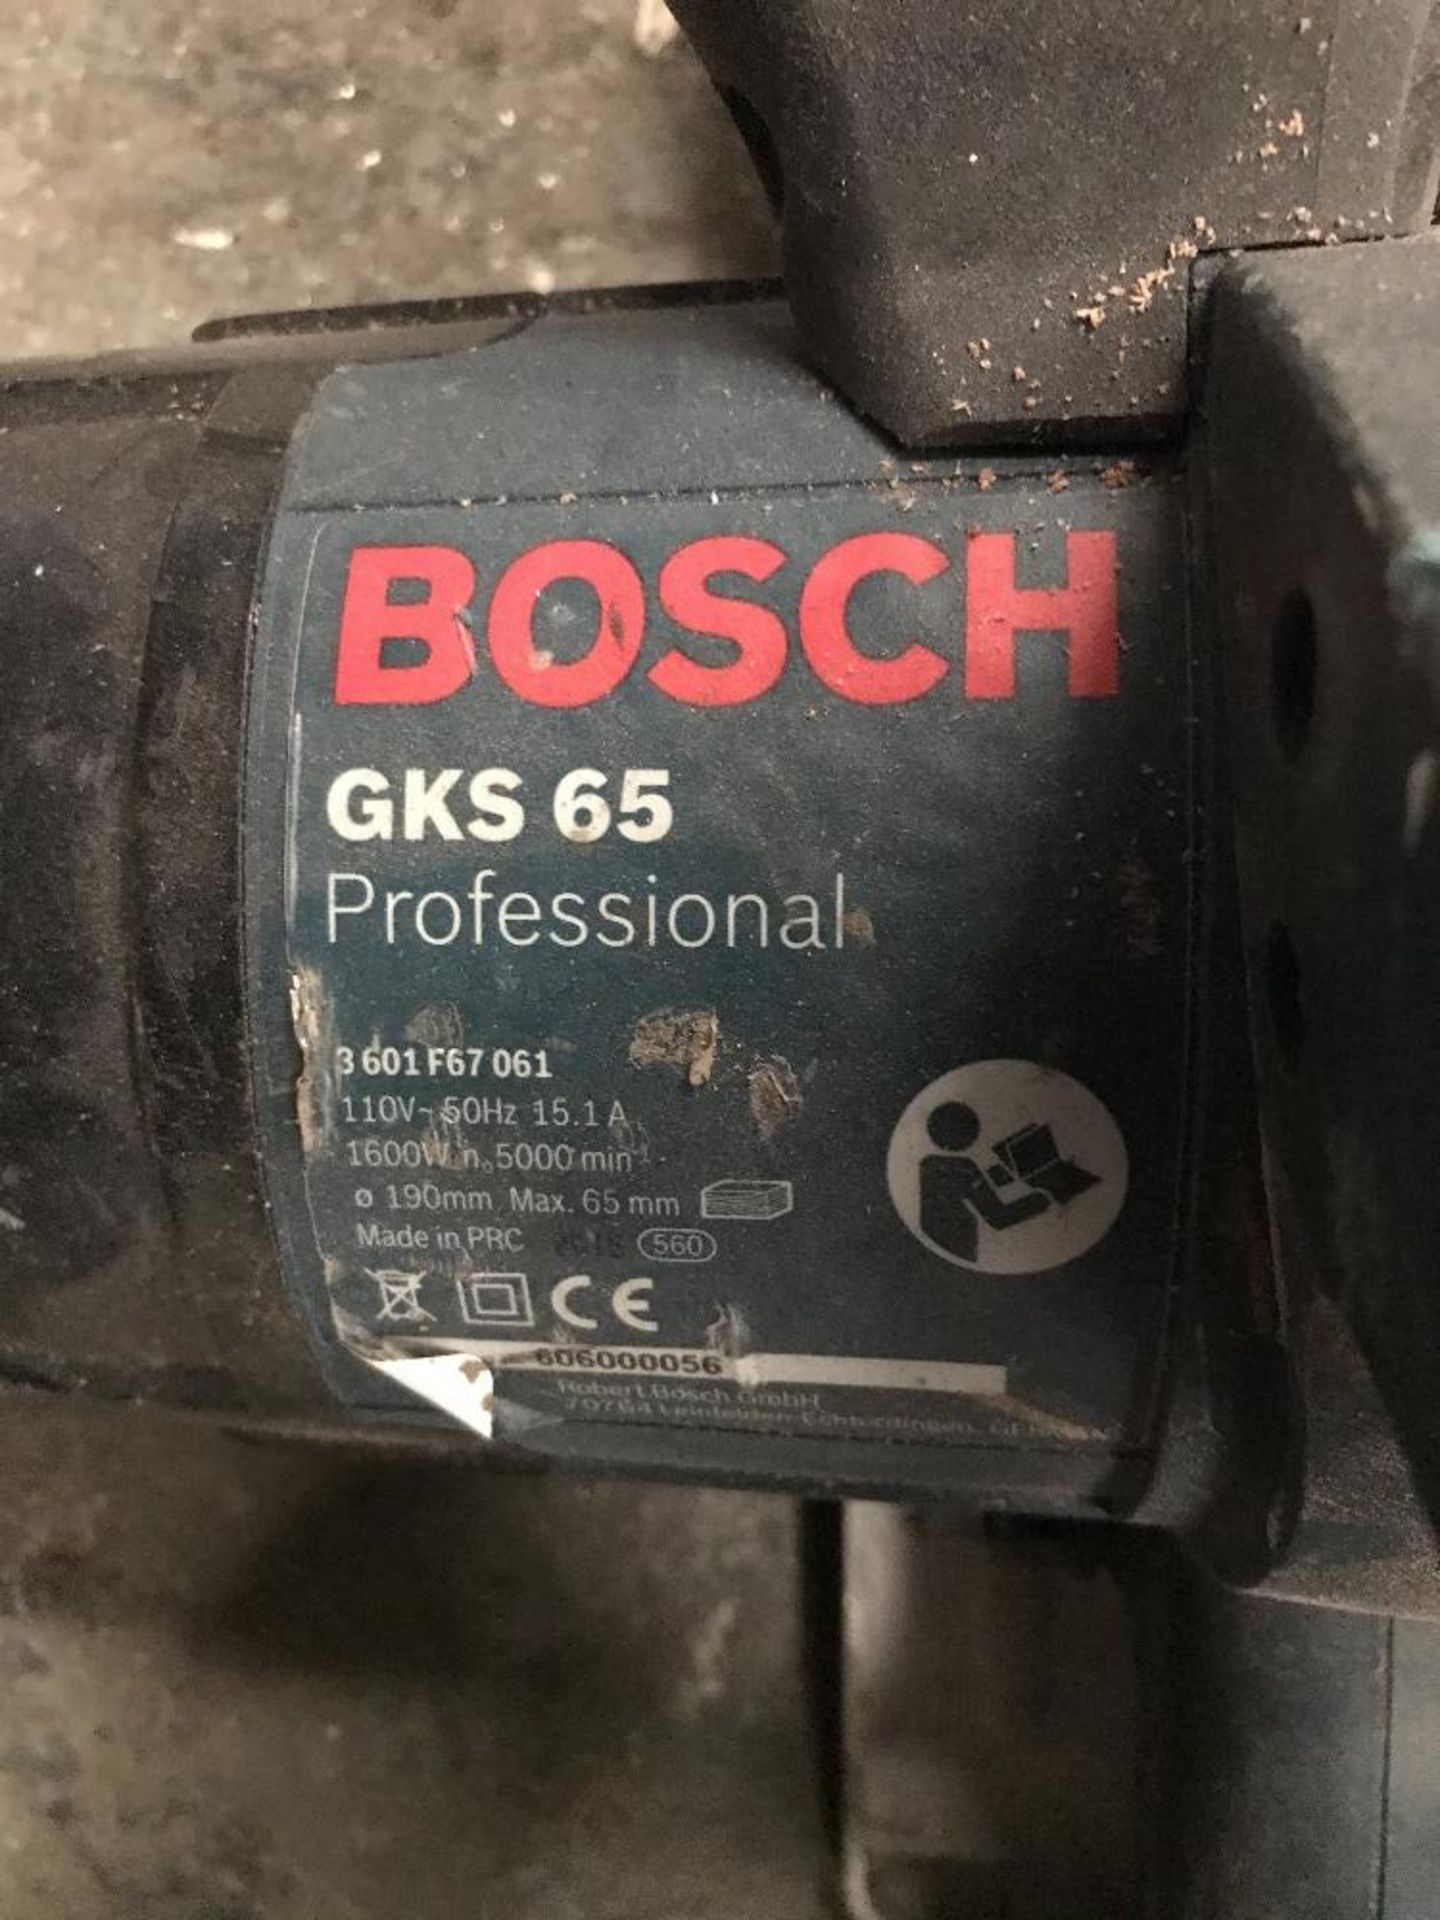 Bosch GKS 65 Professional 190mm Circular Saw - Image 2 of 3